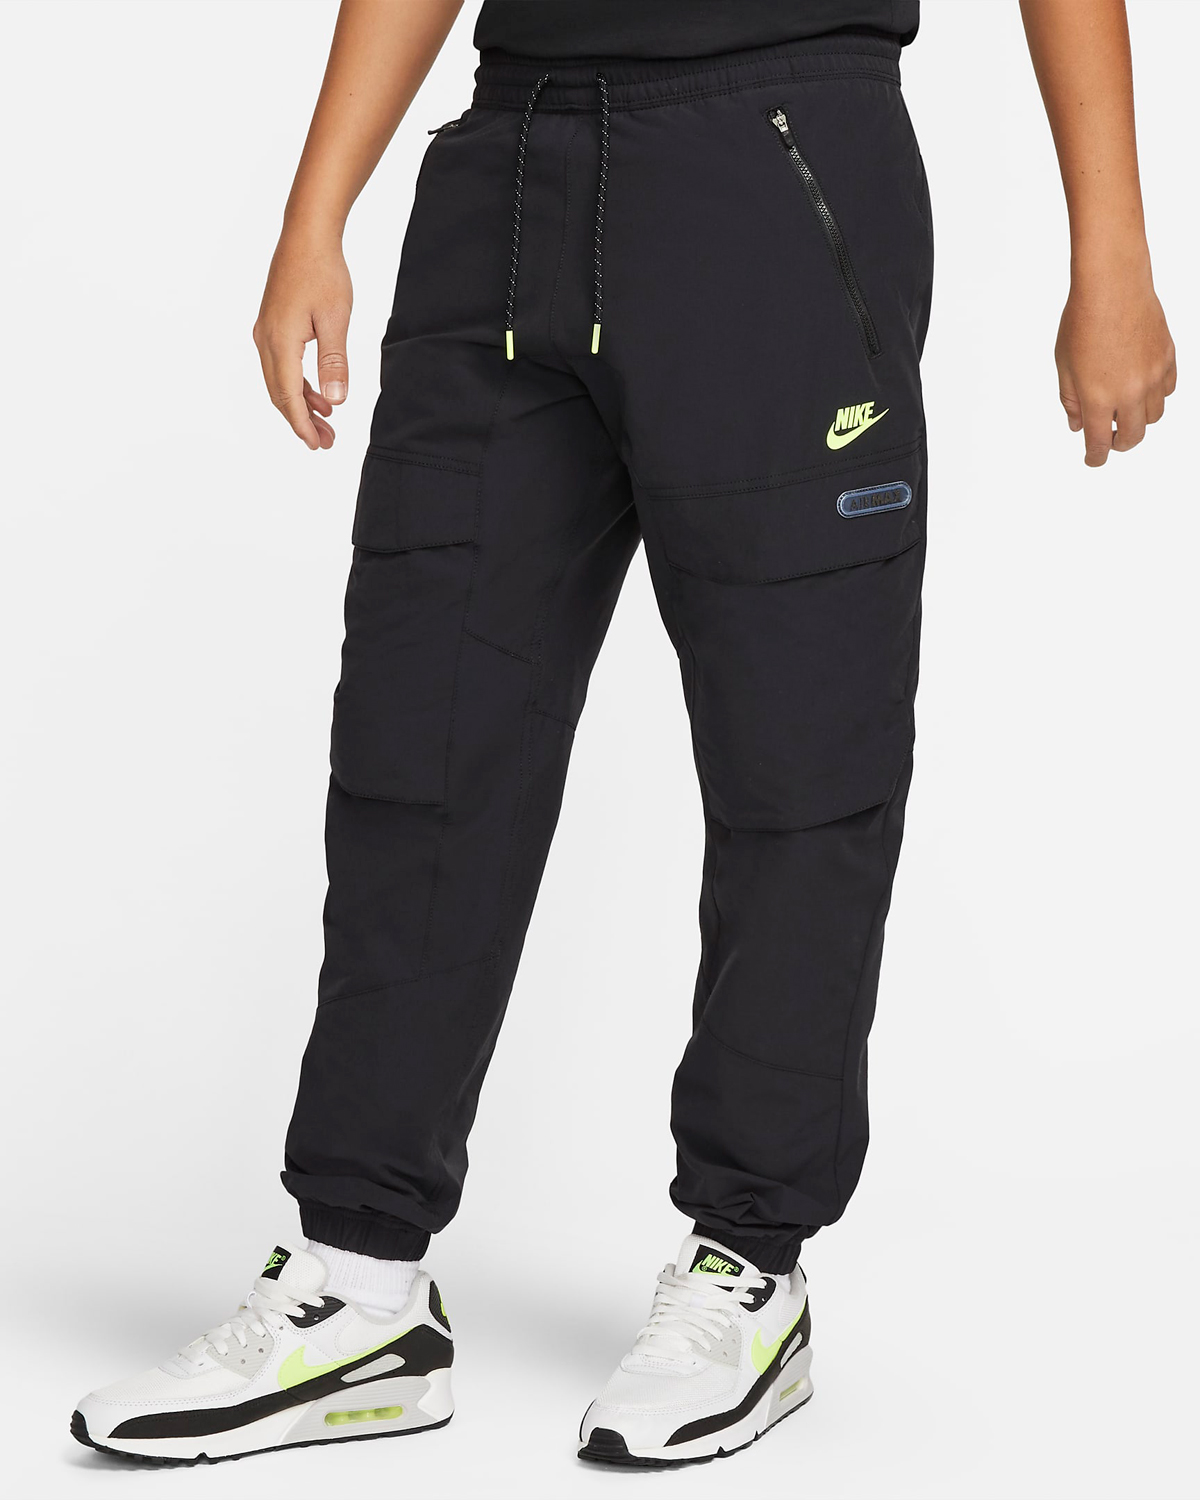 Nike-Sportswear-Air-Max-Woven-Cargo-Pants-Black-Volt